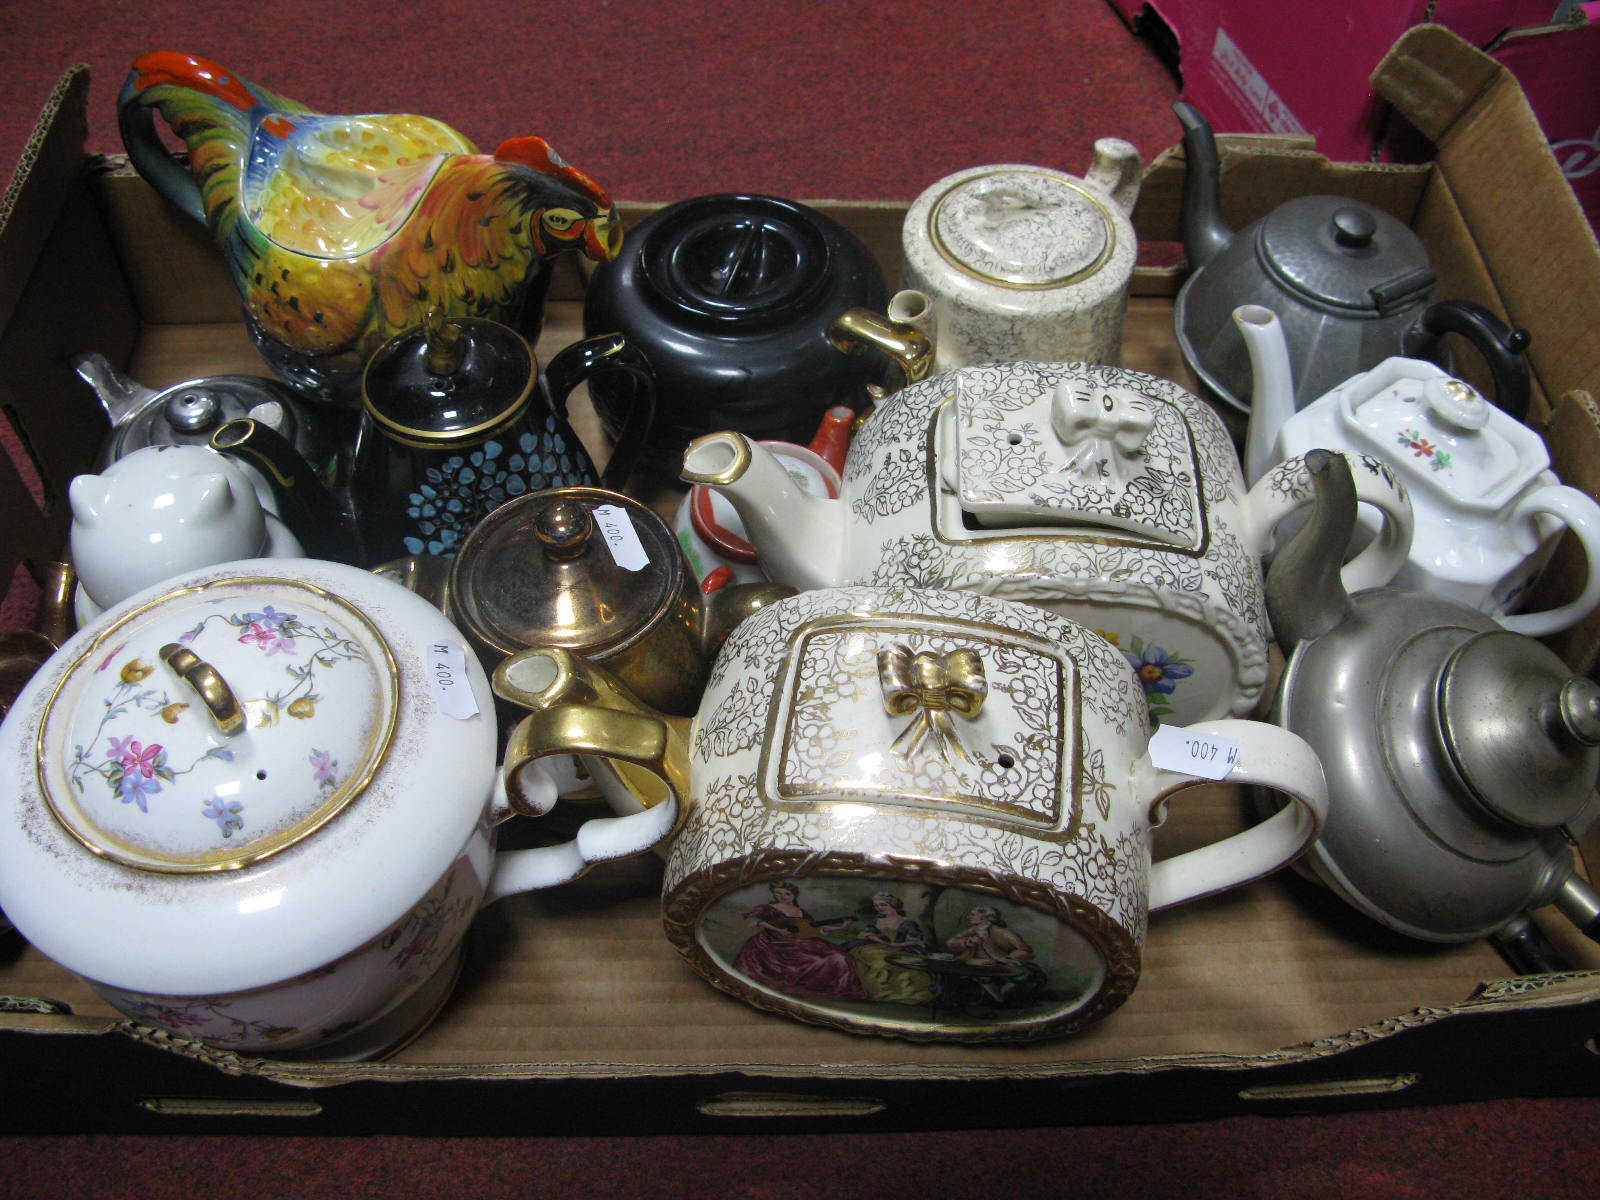 Sadler Teapot, pewter teapot, Phoenix Ware teapot, cream jug and sugar bowl, other teapots etc:- One